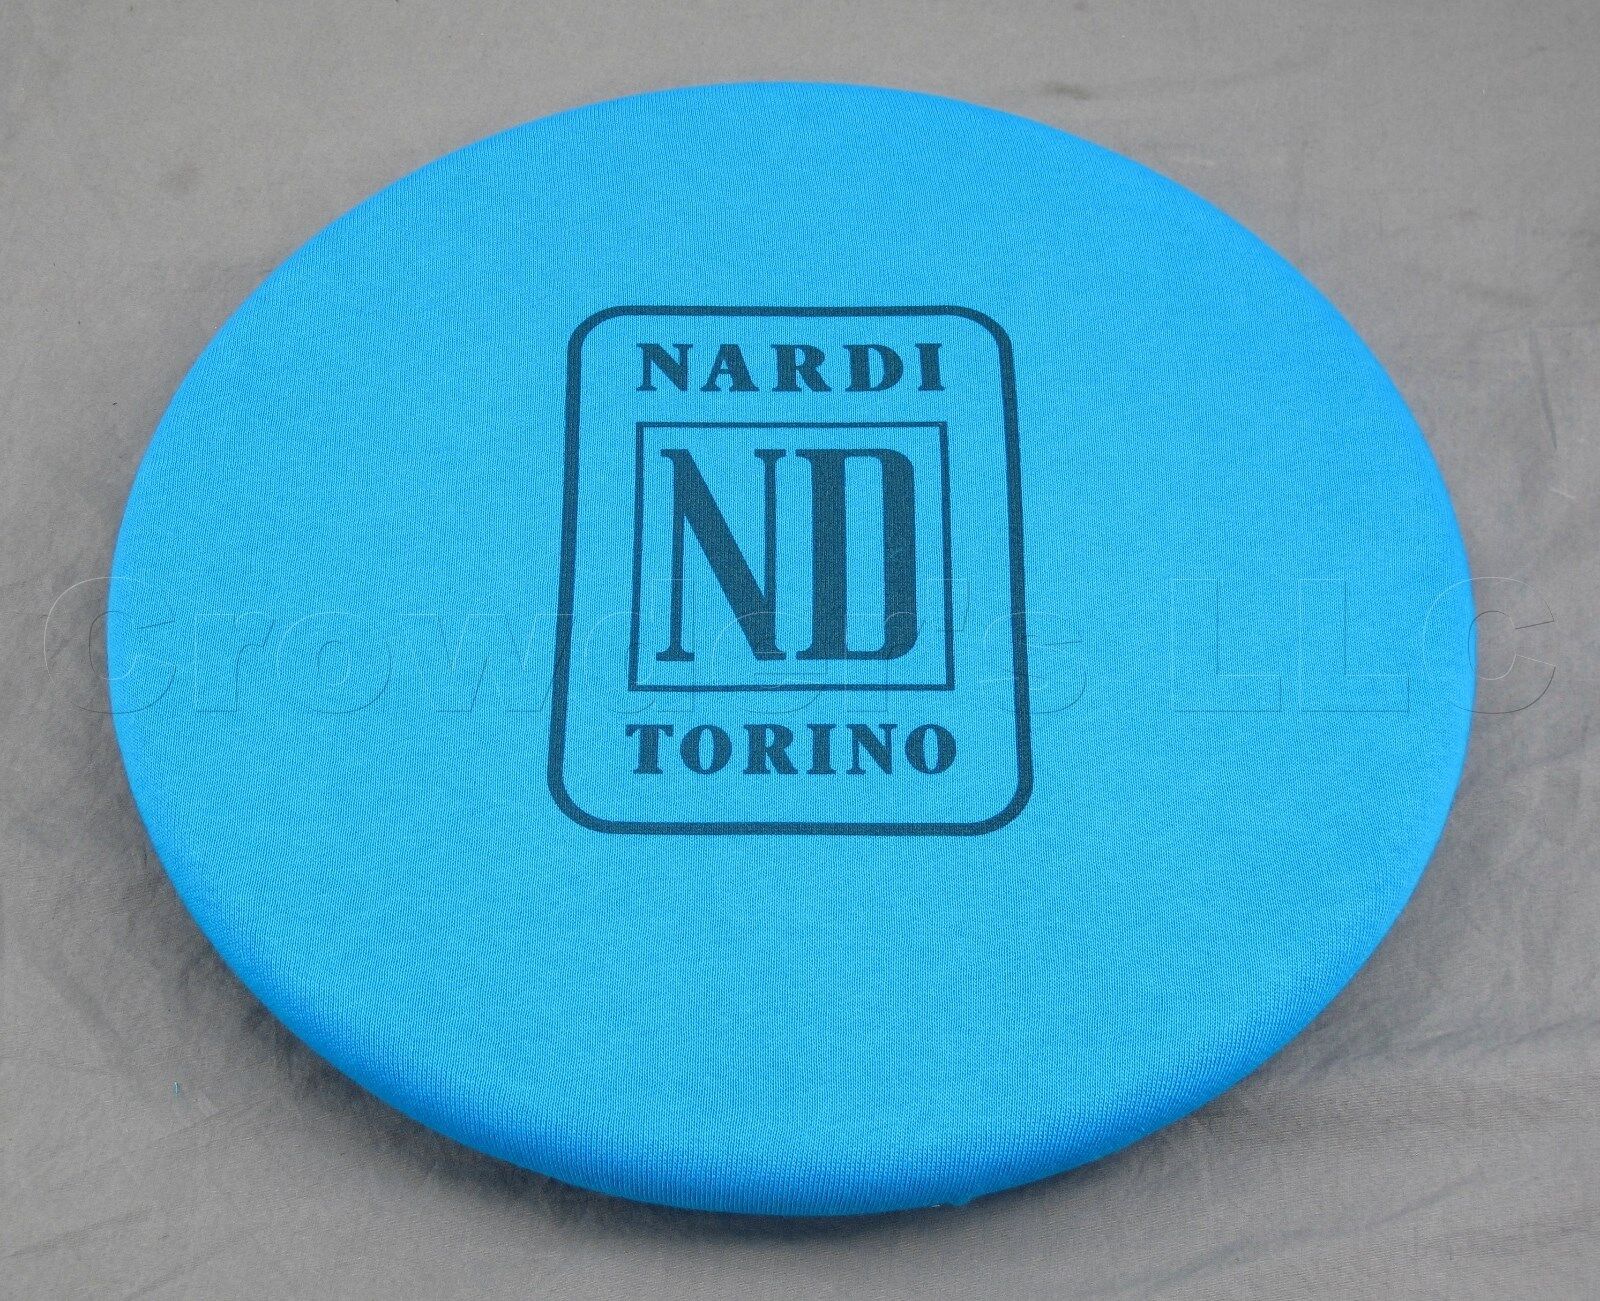 Nardi Blue Fabric Steering Wheel Cover - Nardi ND Torino Logo - Fits 330mm-390mm